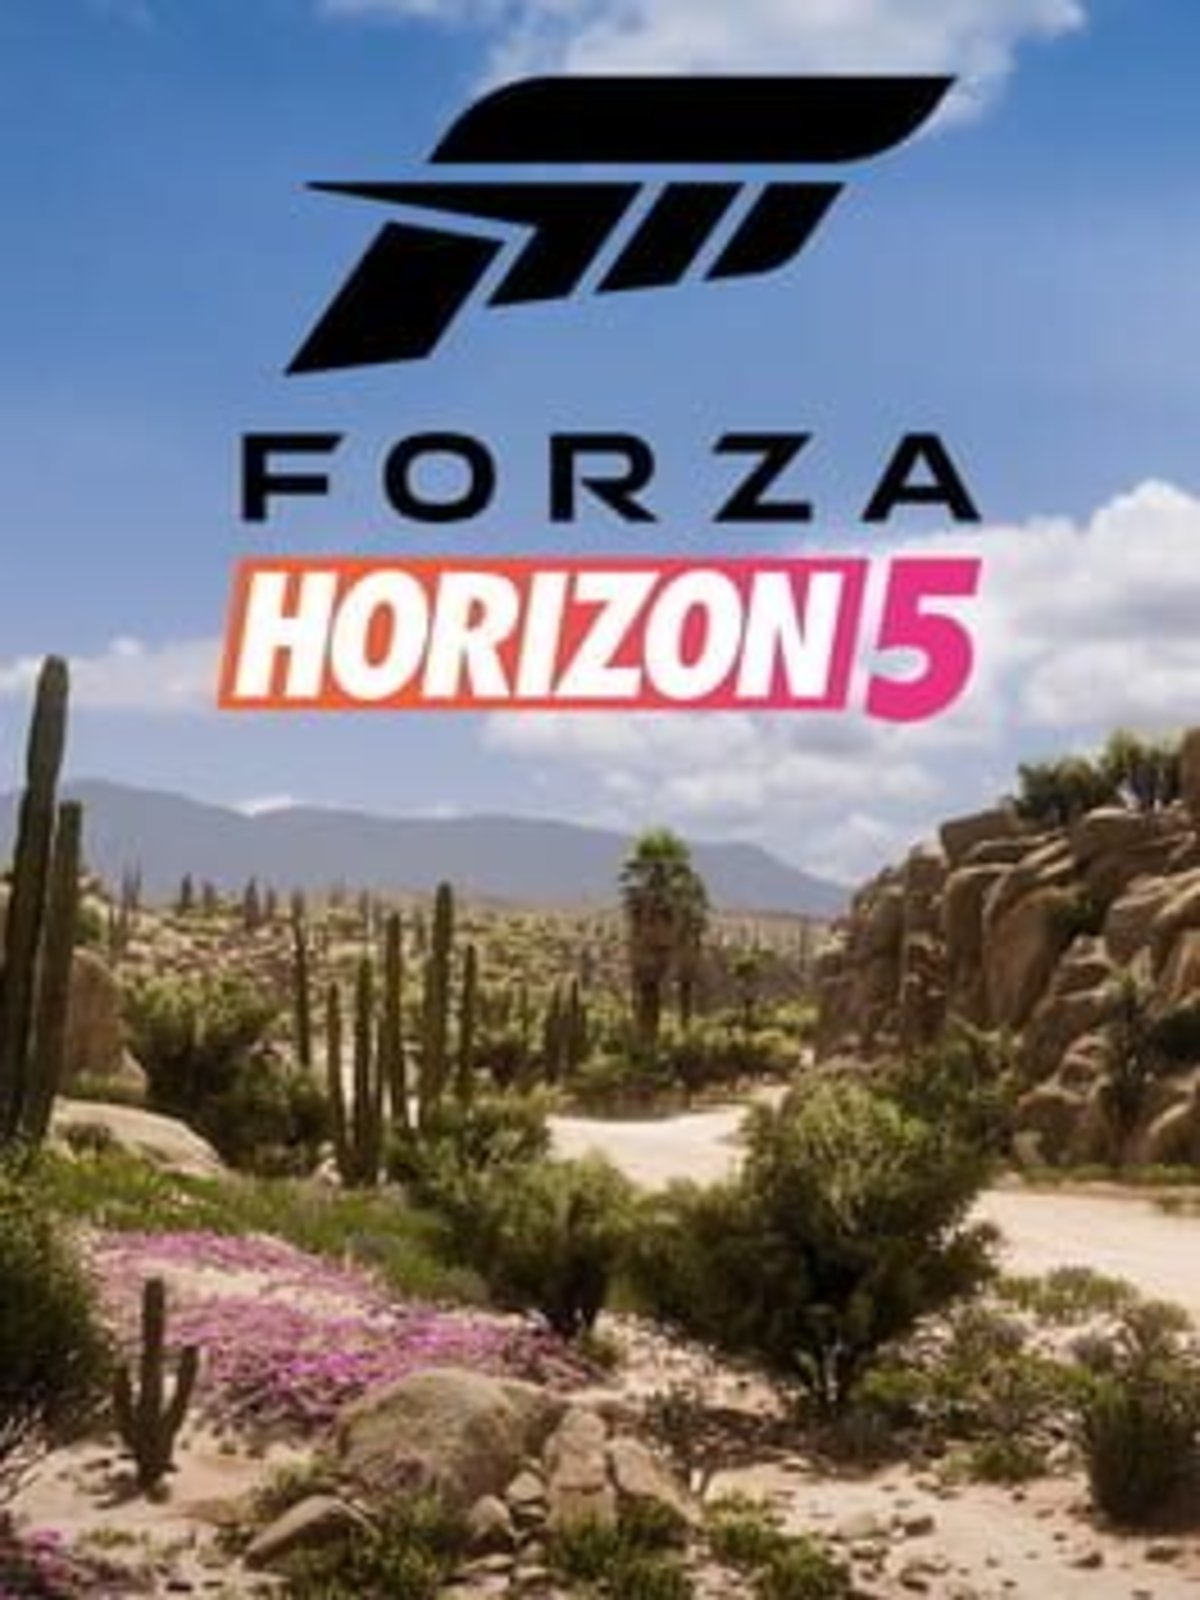 Forza Horizon 5 has 11 different biomes